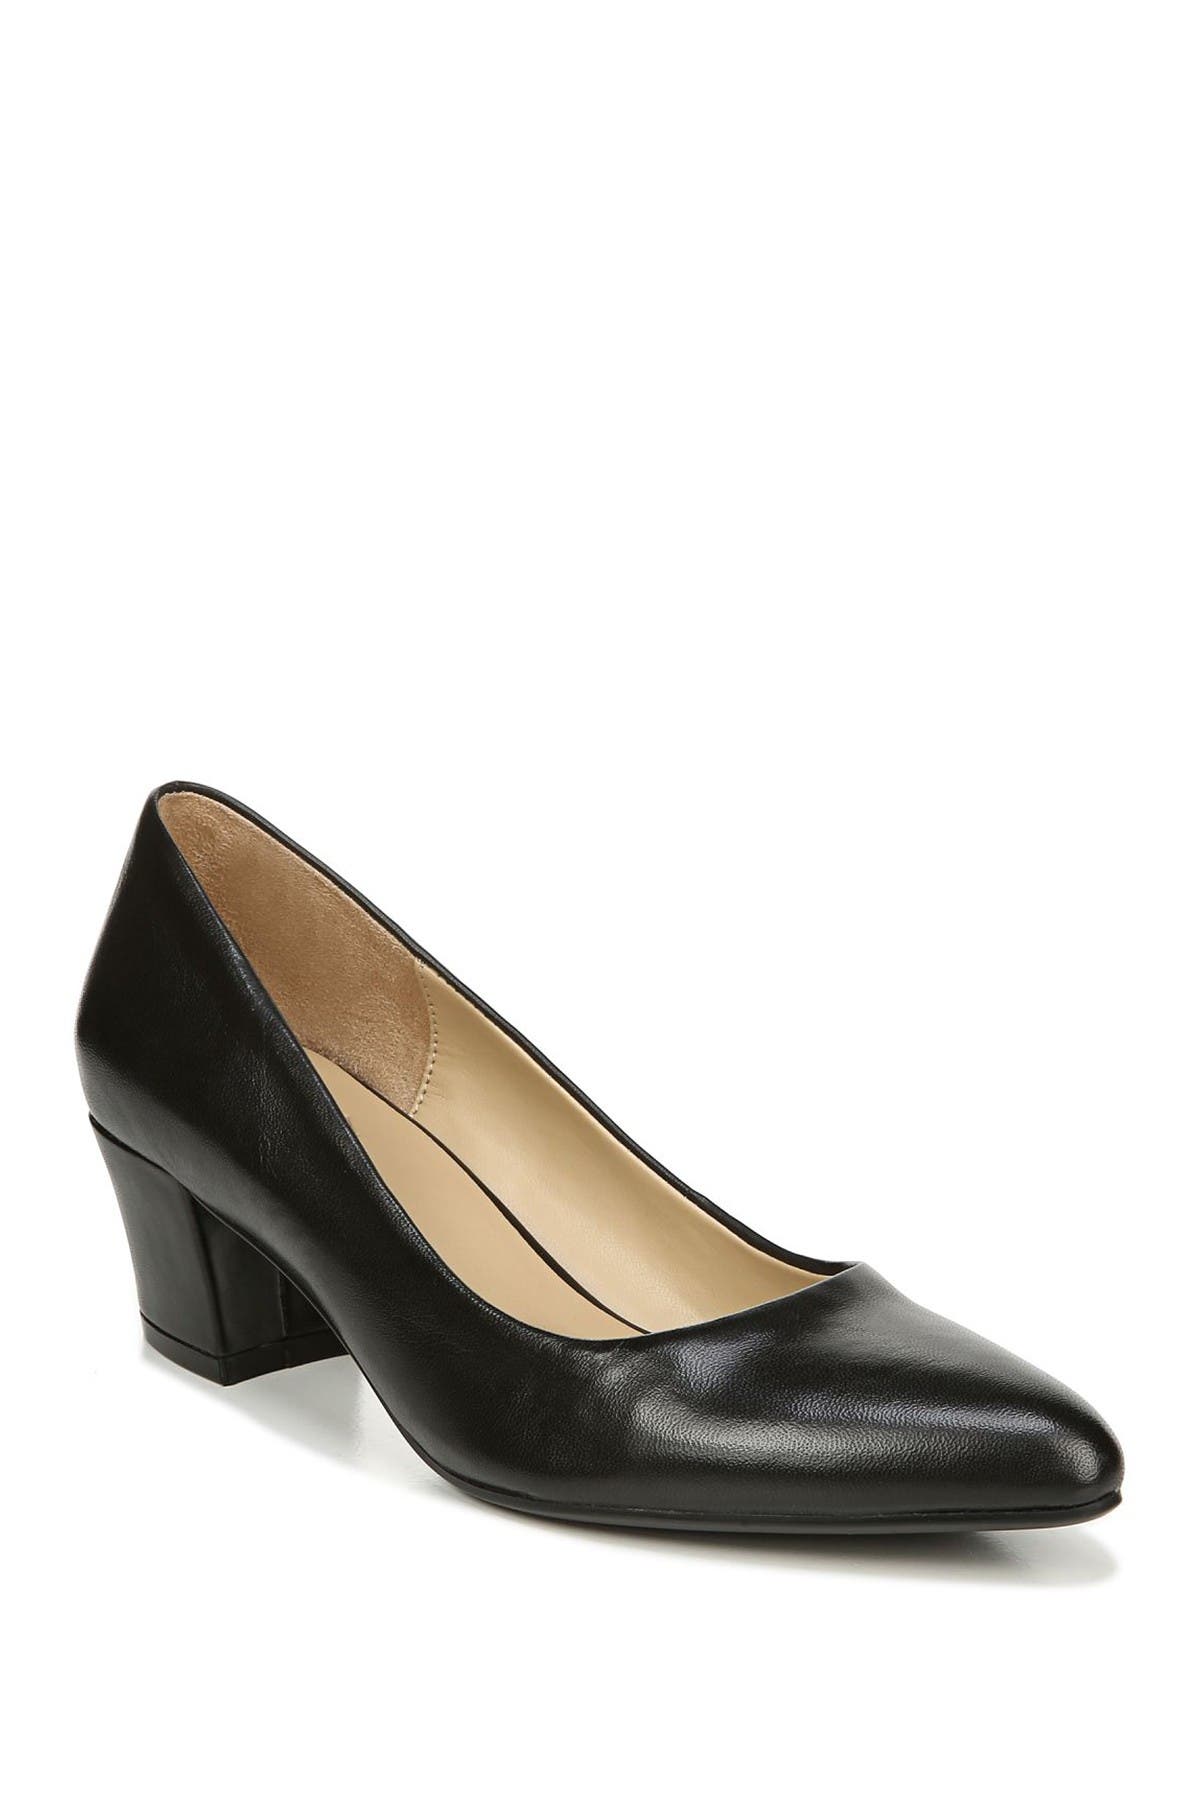 wide width black block heels